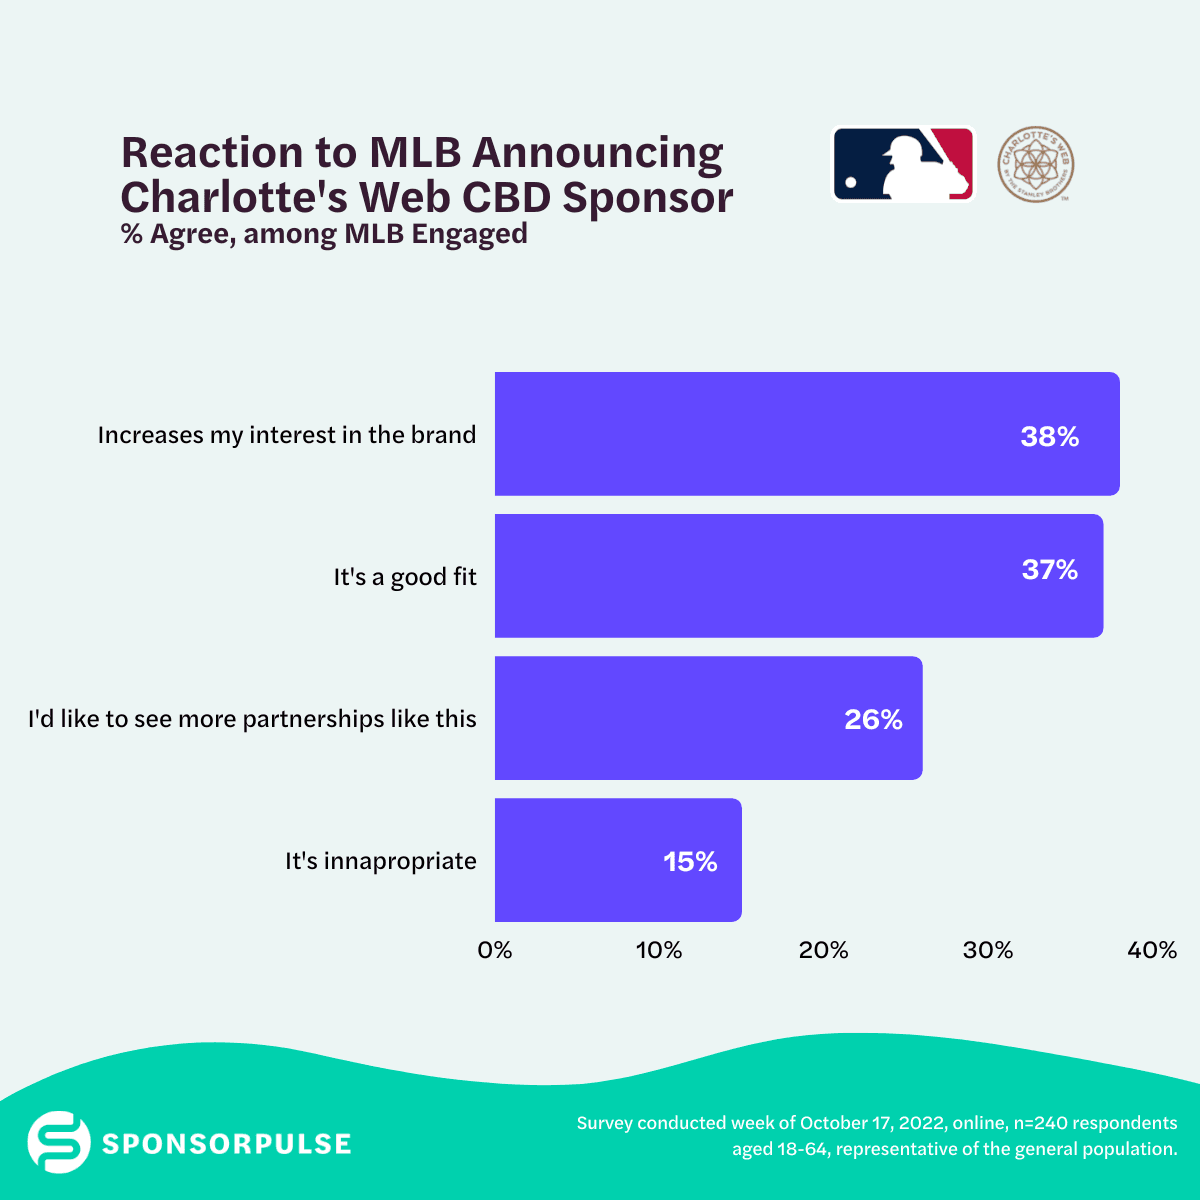 MLB Charlottes Web